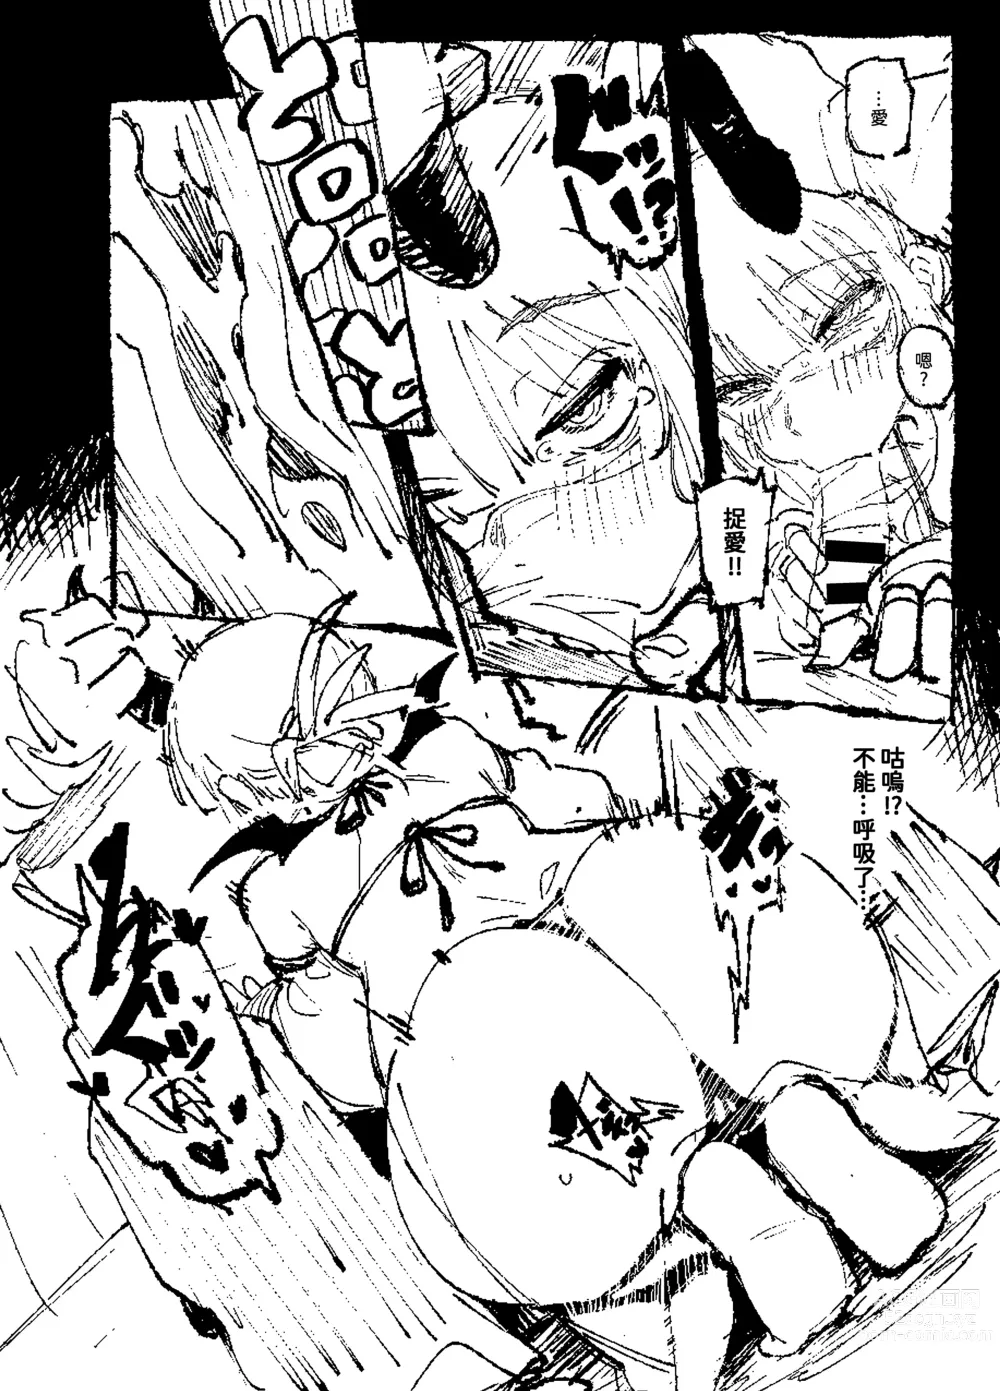 Page 33 of doujinshi 家裡過於潮濕長出致幻蘑菇意外誤食後發情的那些事